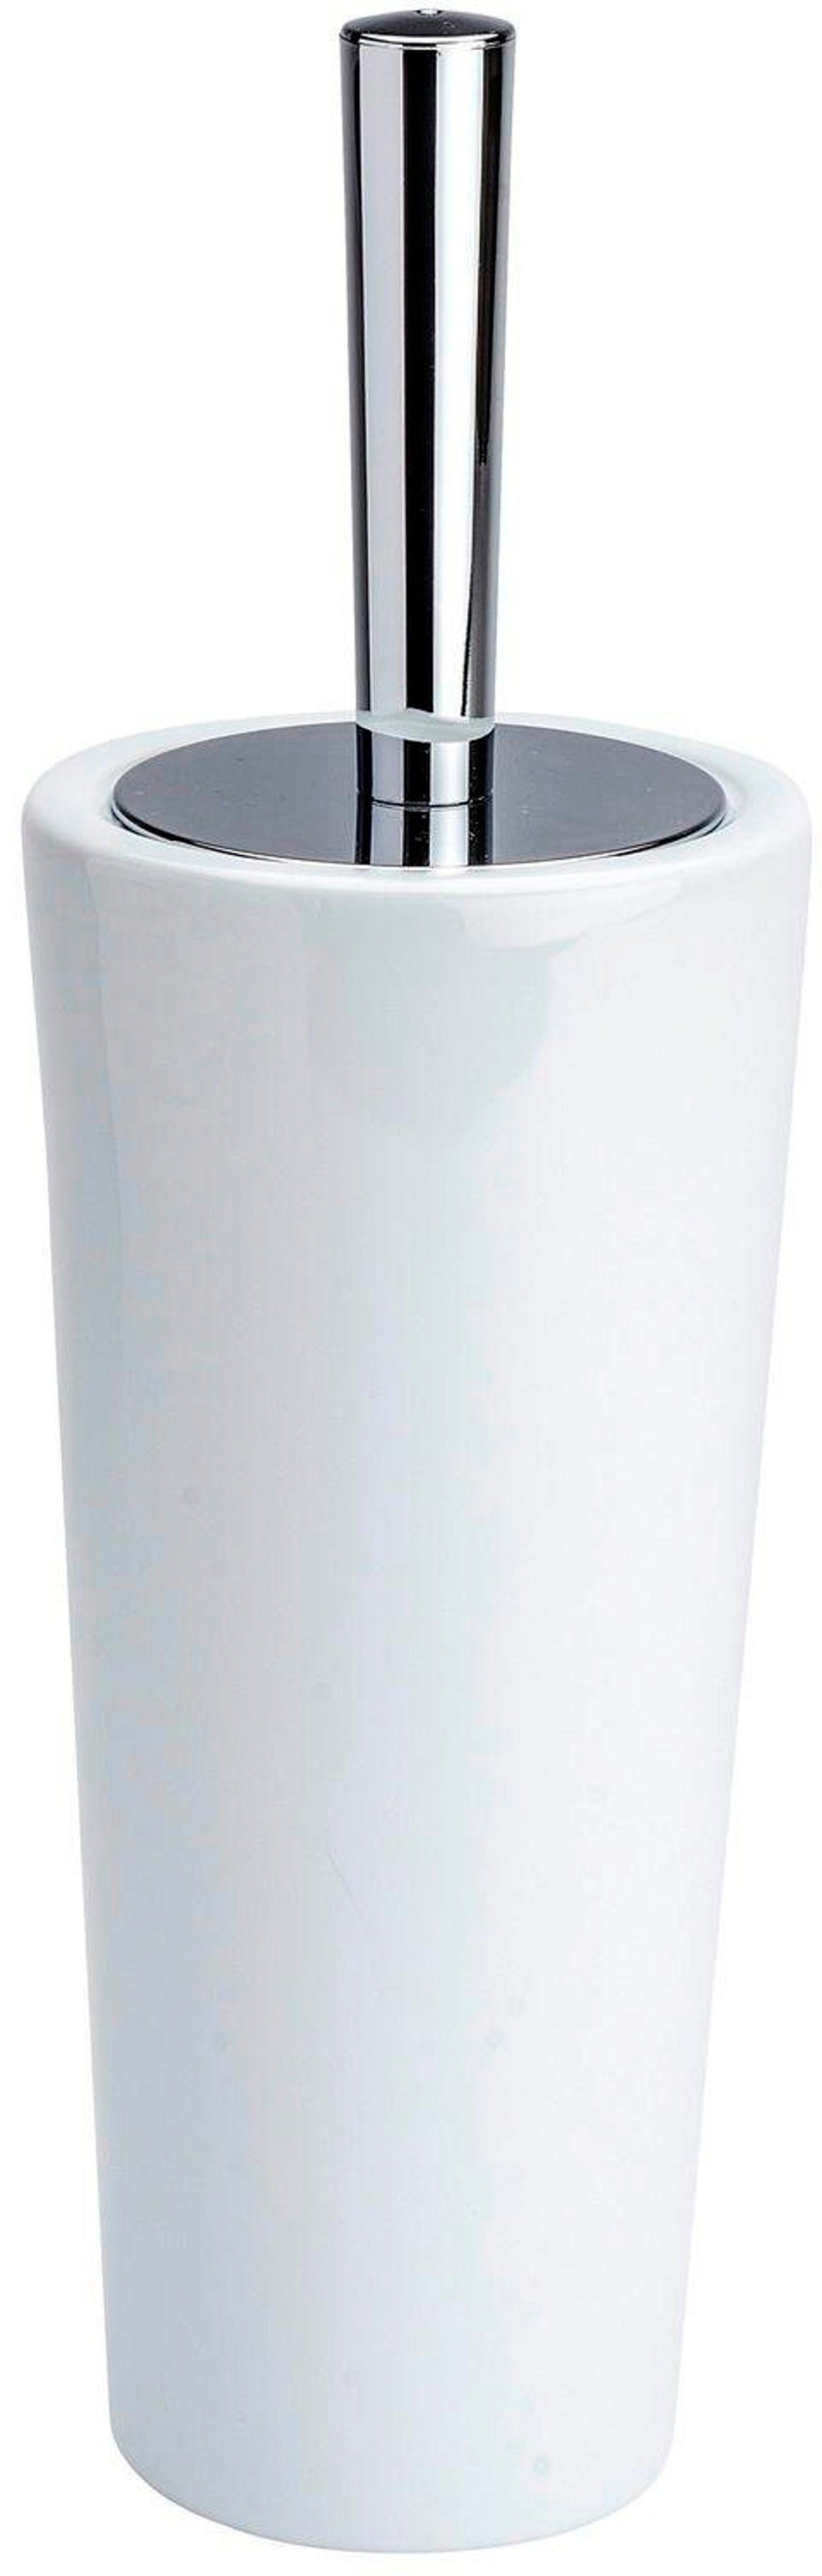 WC-Garnitur Keramik, Acrylnitril-Butadien-Styrol Deckel, Material: Keramik, (ABS) WENKO Stiel: Coni,